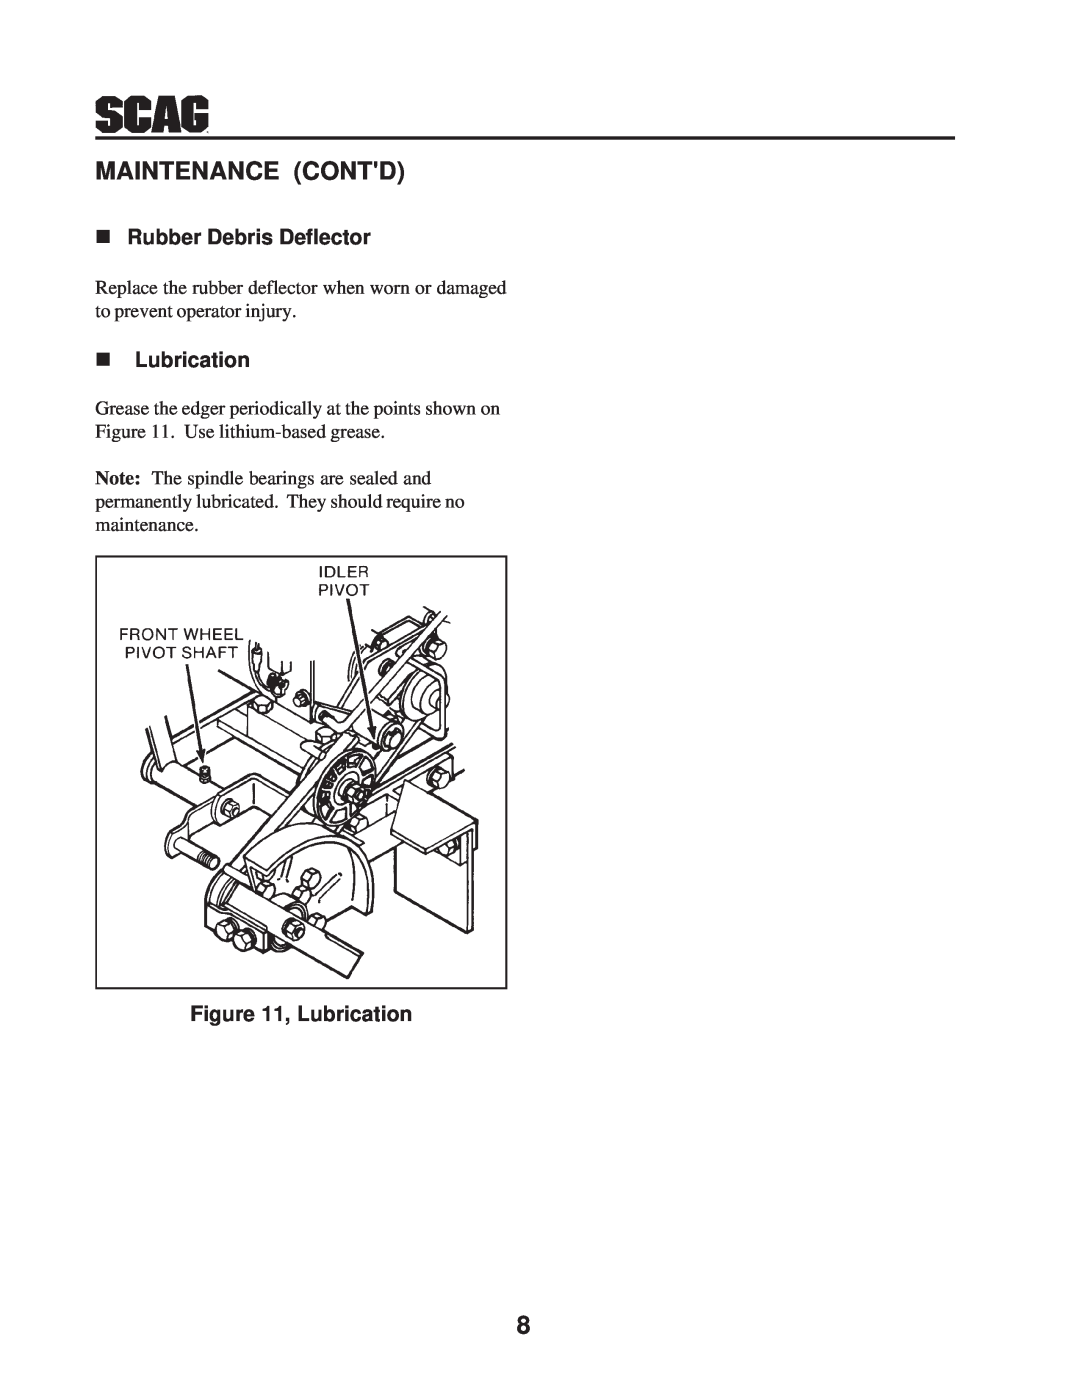 Scag Power Equipment SE-3.5BS manual n Rubber Debris Deflector, n Lubrication, Maintenance Contd 